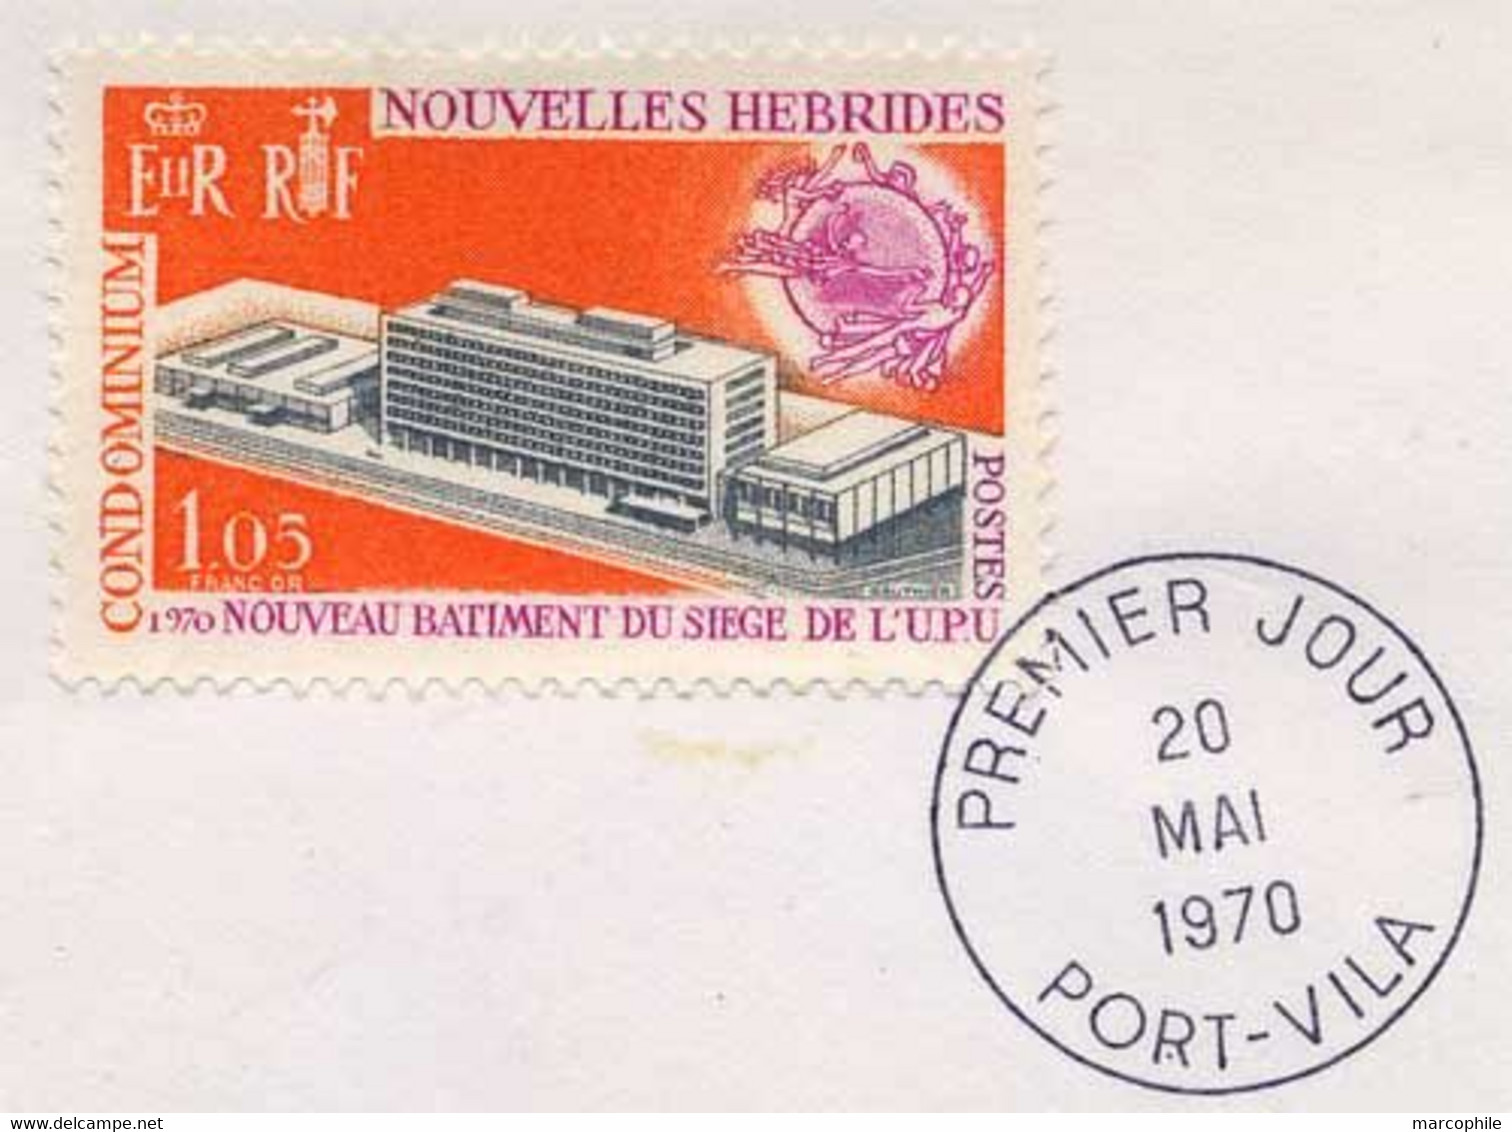 NOUVELLES HEBRIDES - PORT VILA / 1970 FDC U.P.U. (ref 890c) - FDC